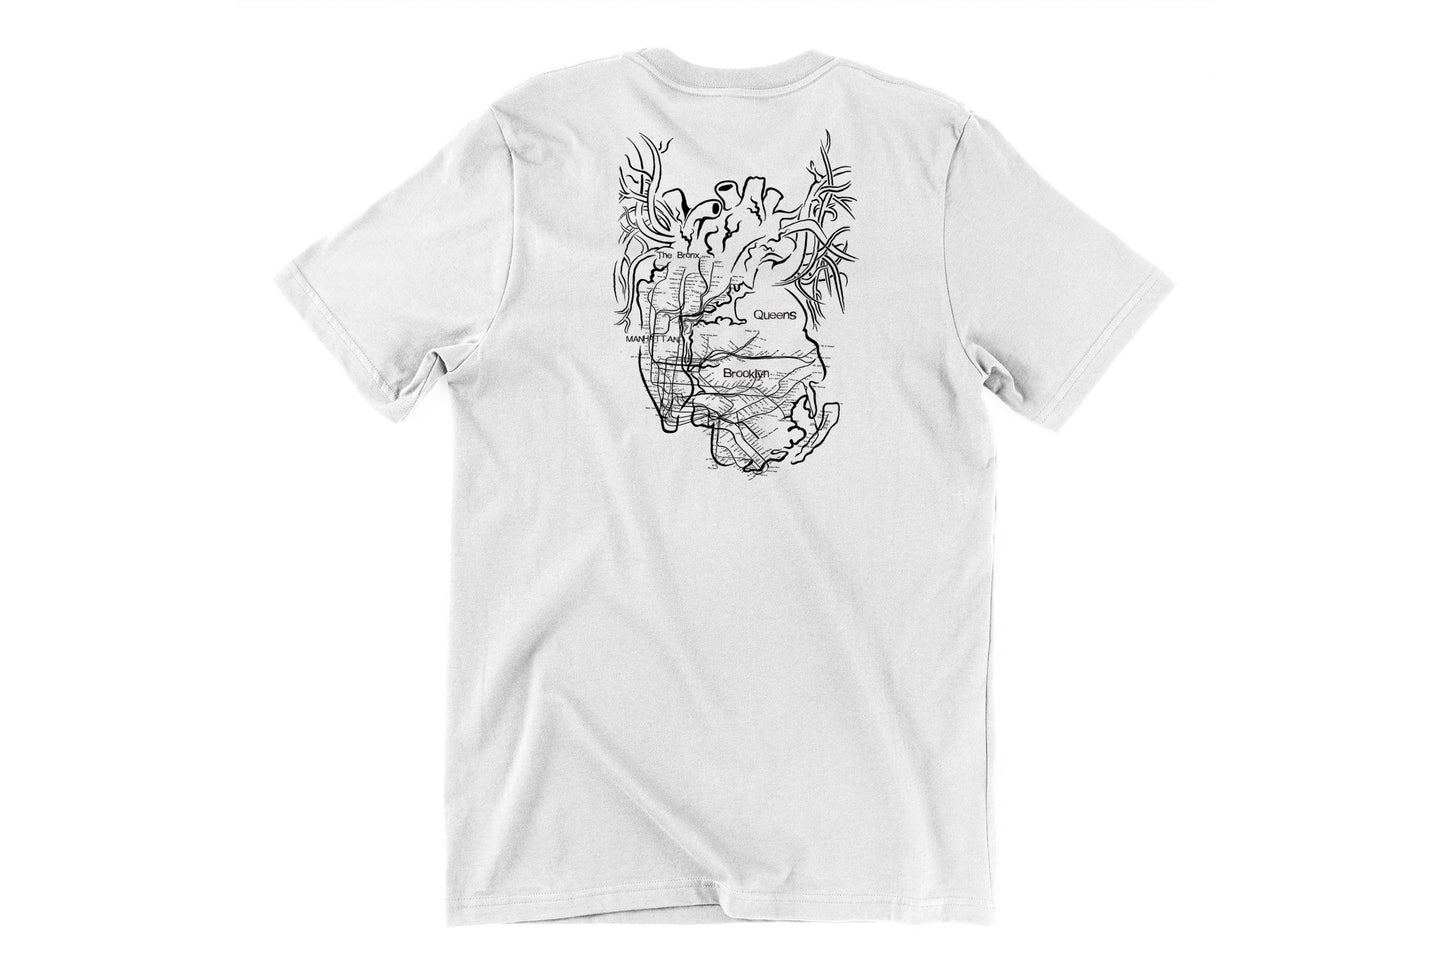 Arteries Silk Screen on White T-Shirt